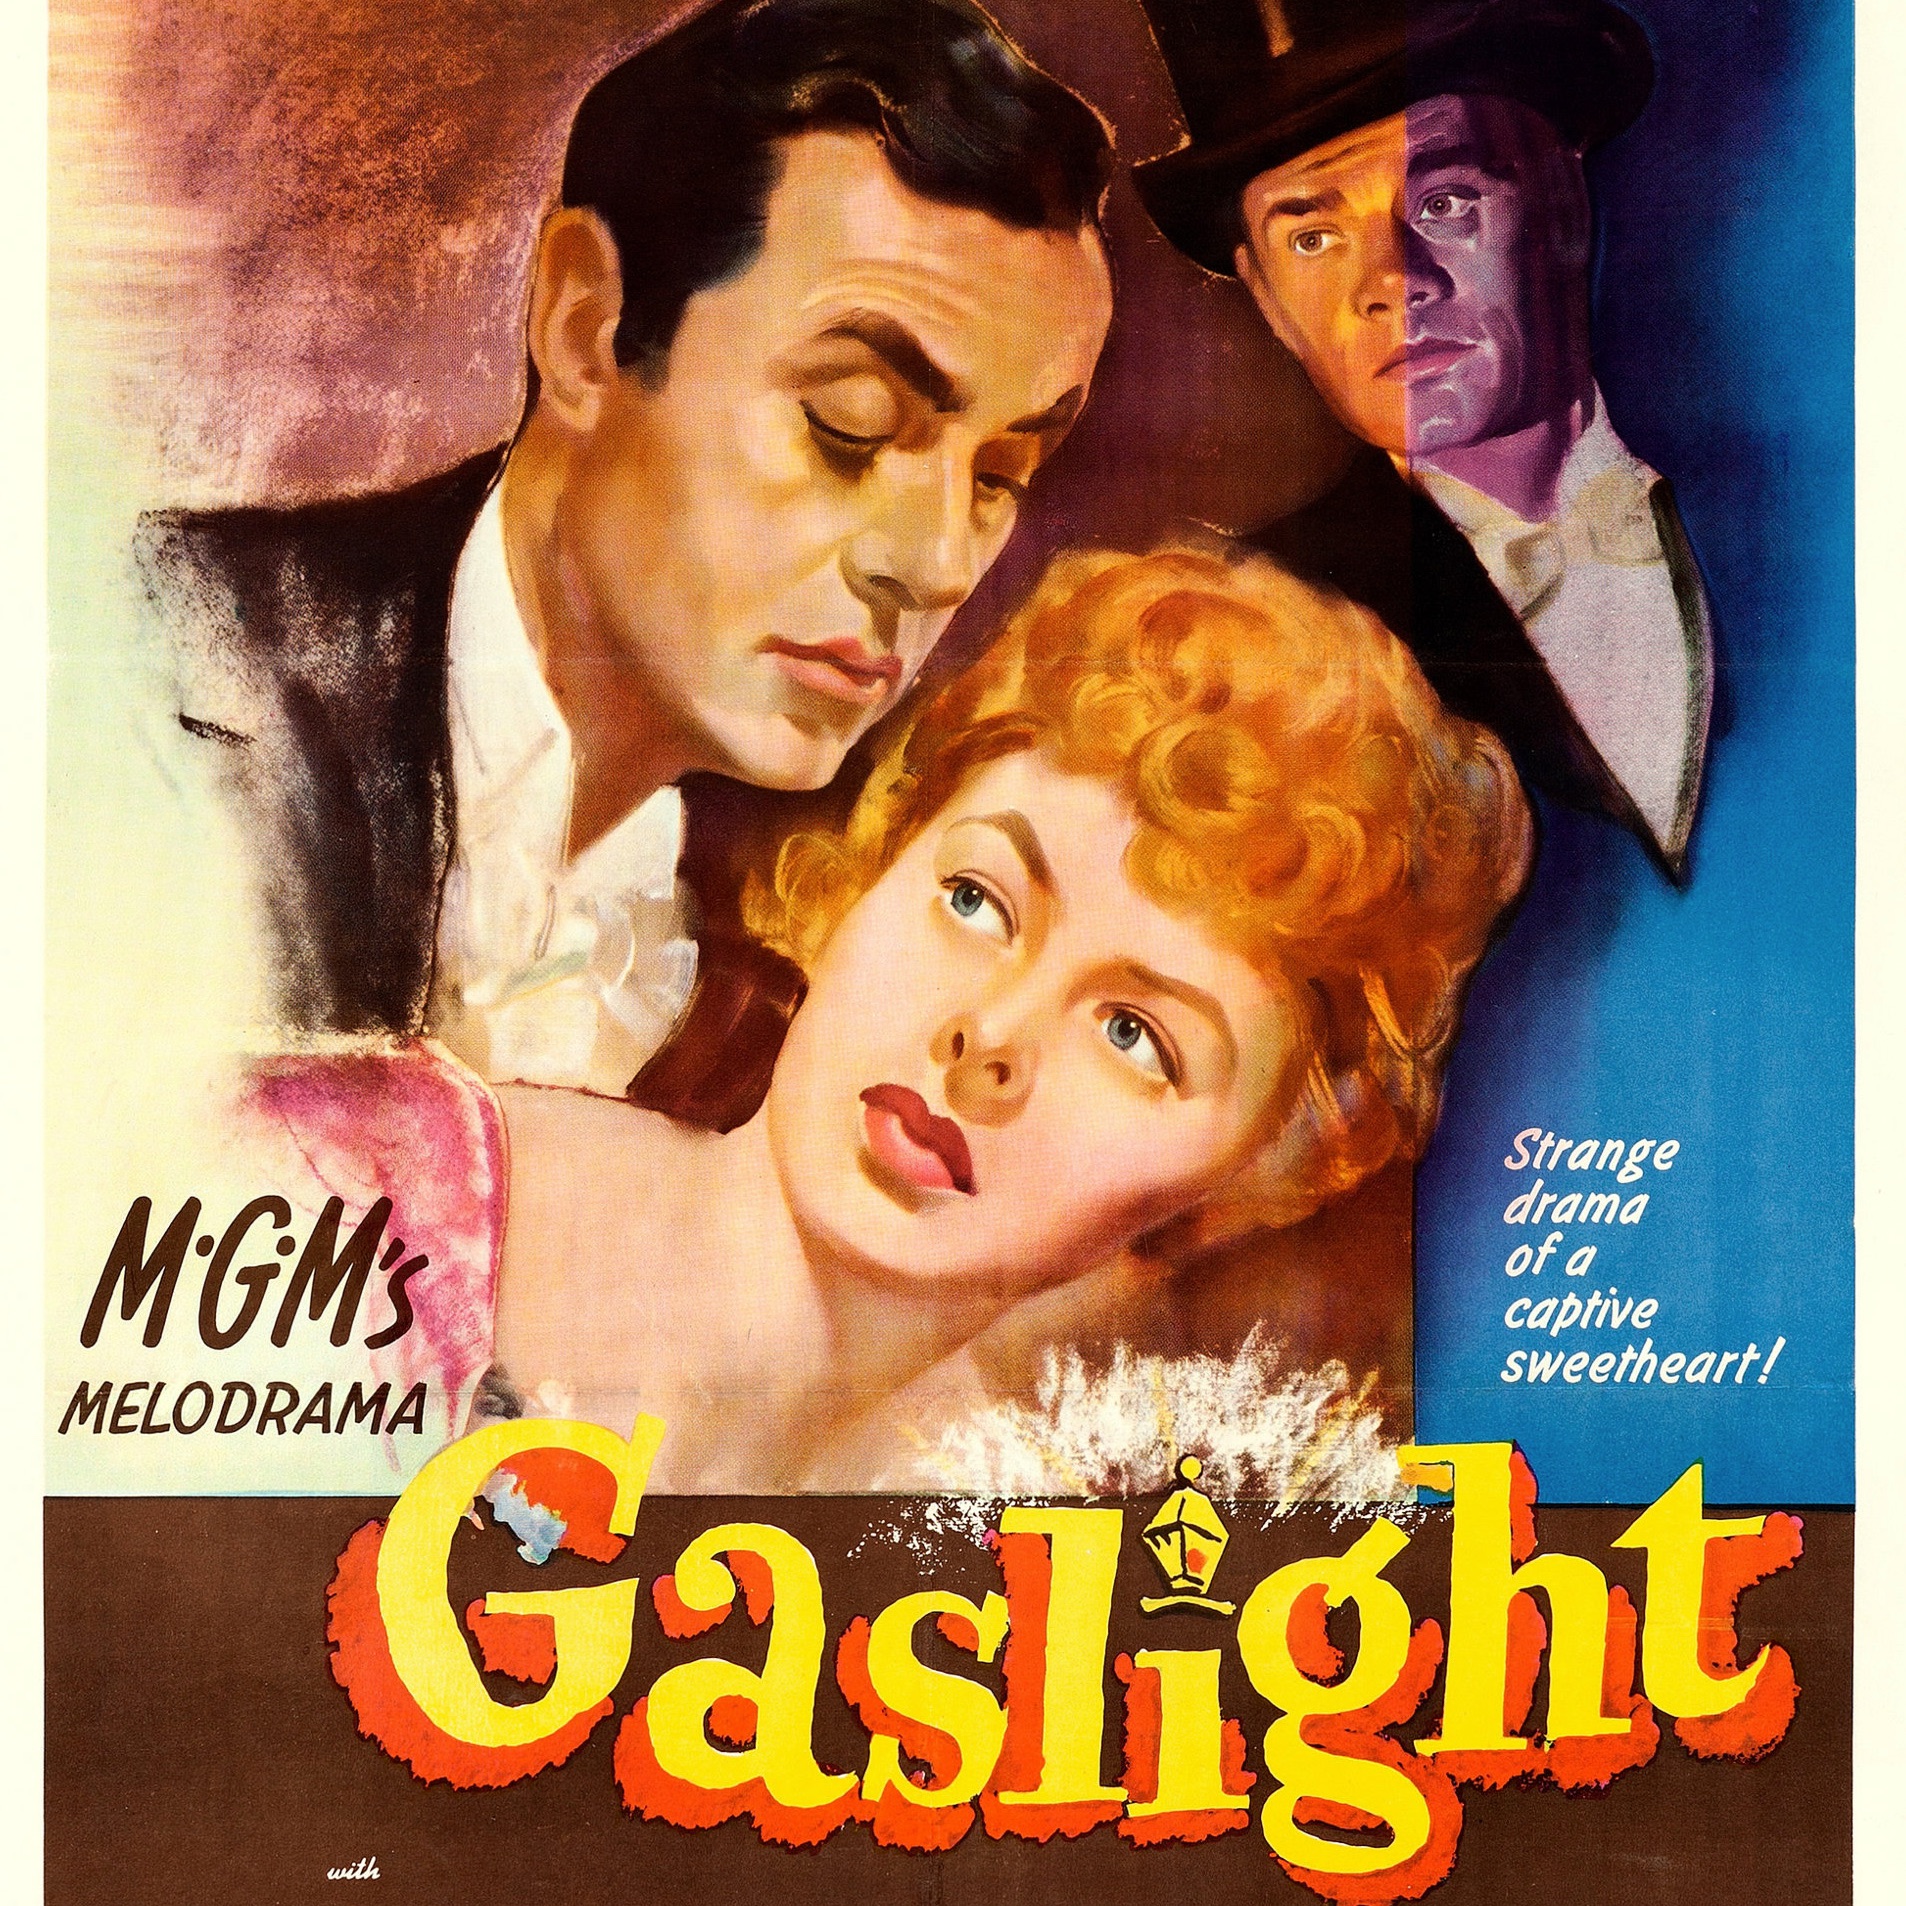 The 1940 film Gaslight starring Ingrid Bergman